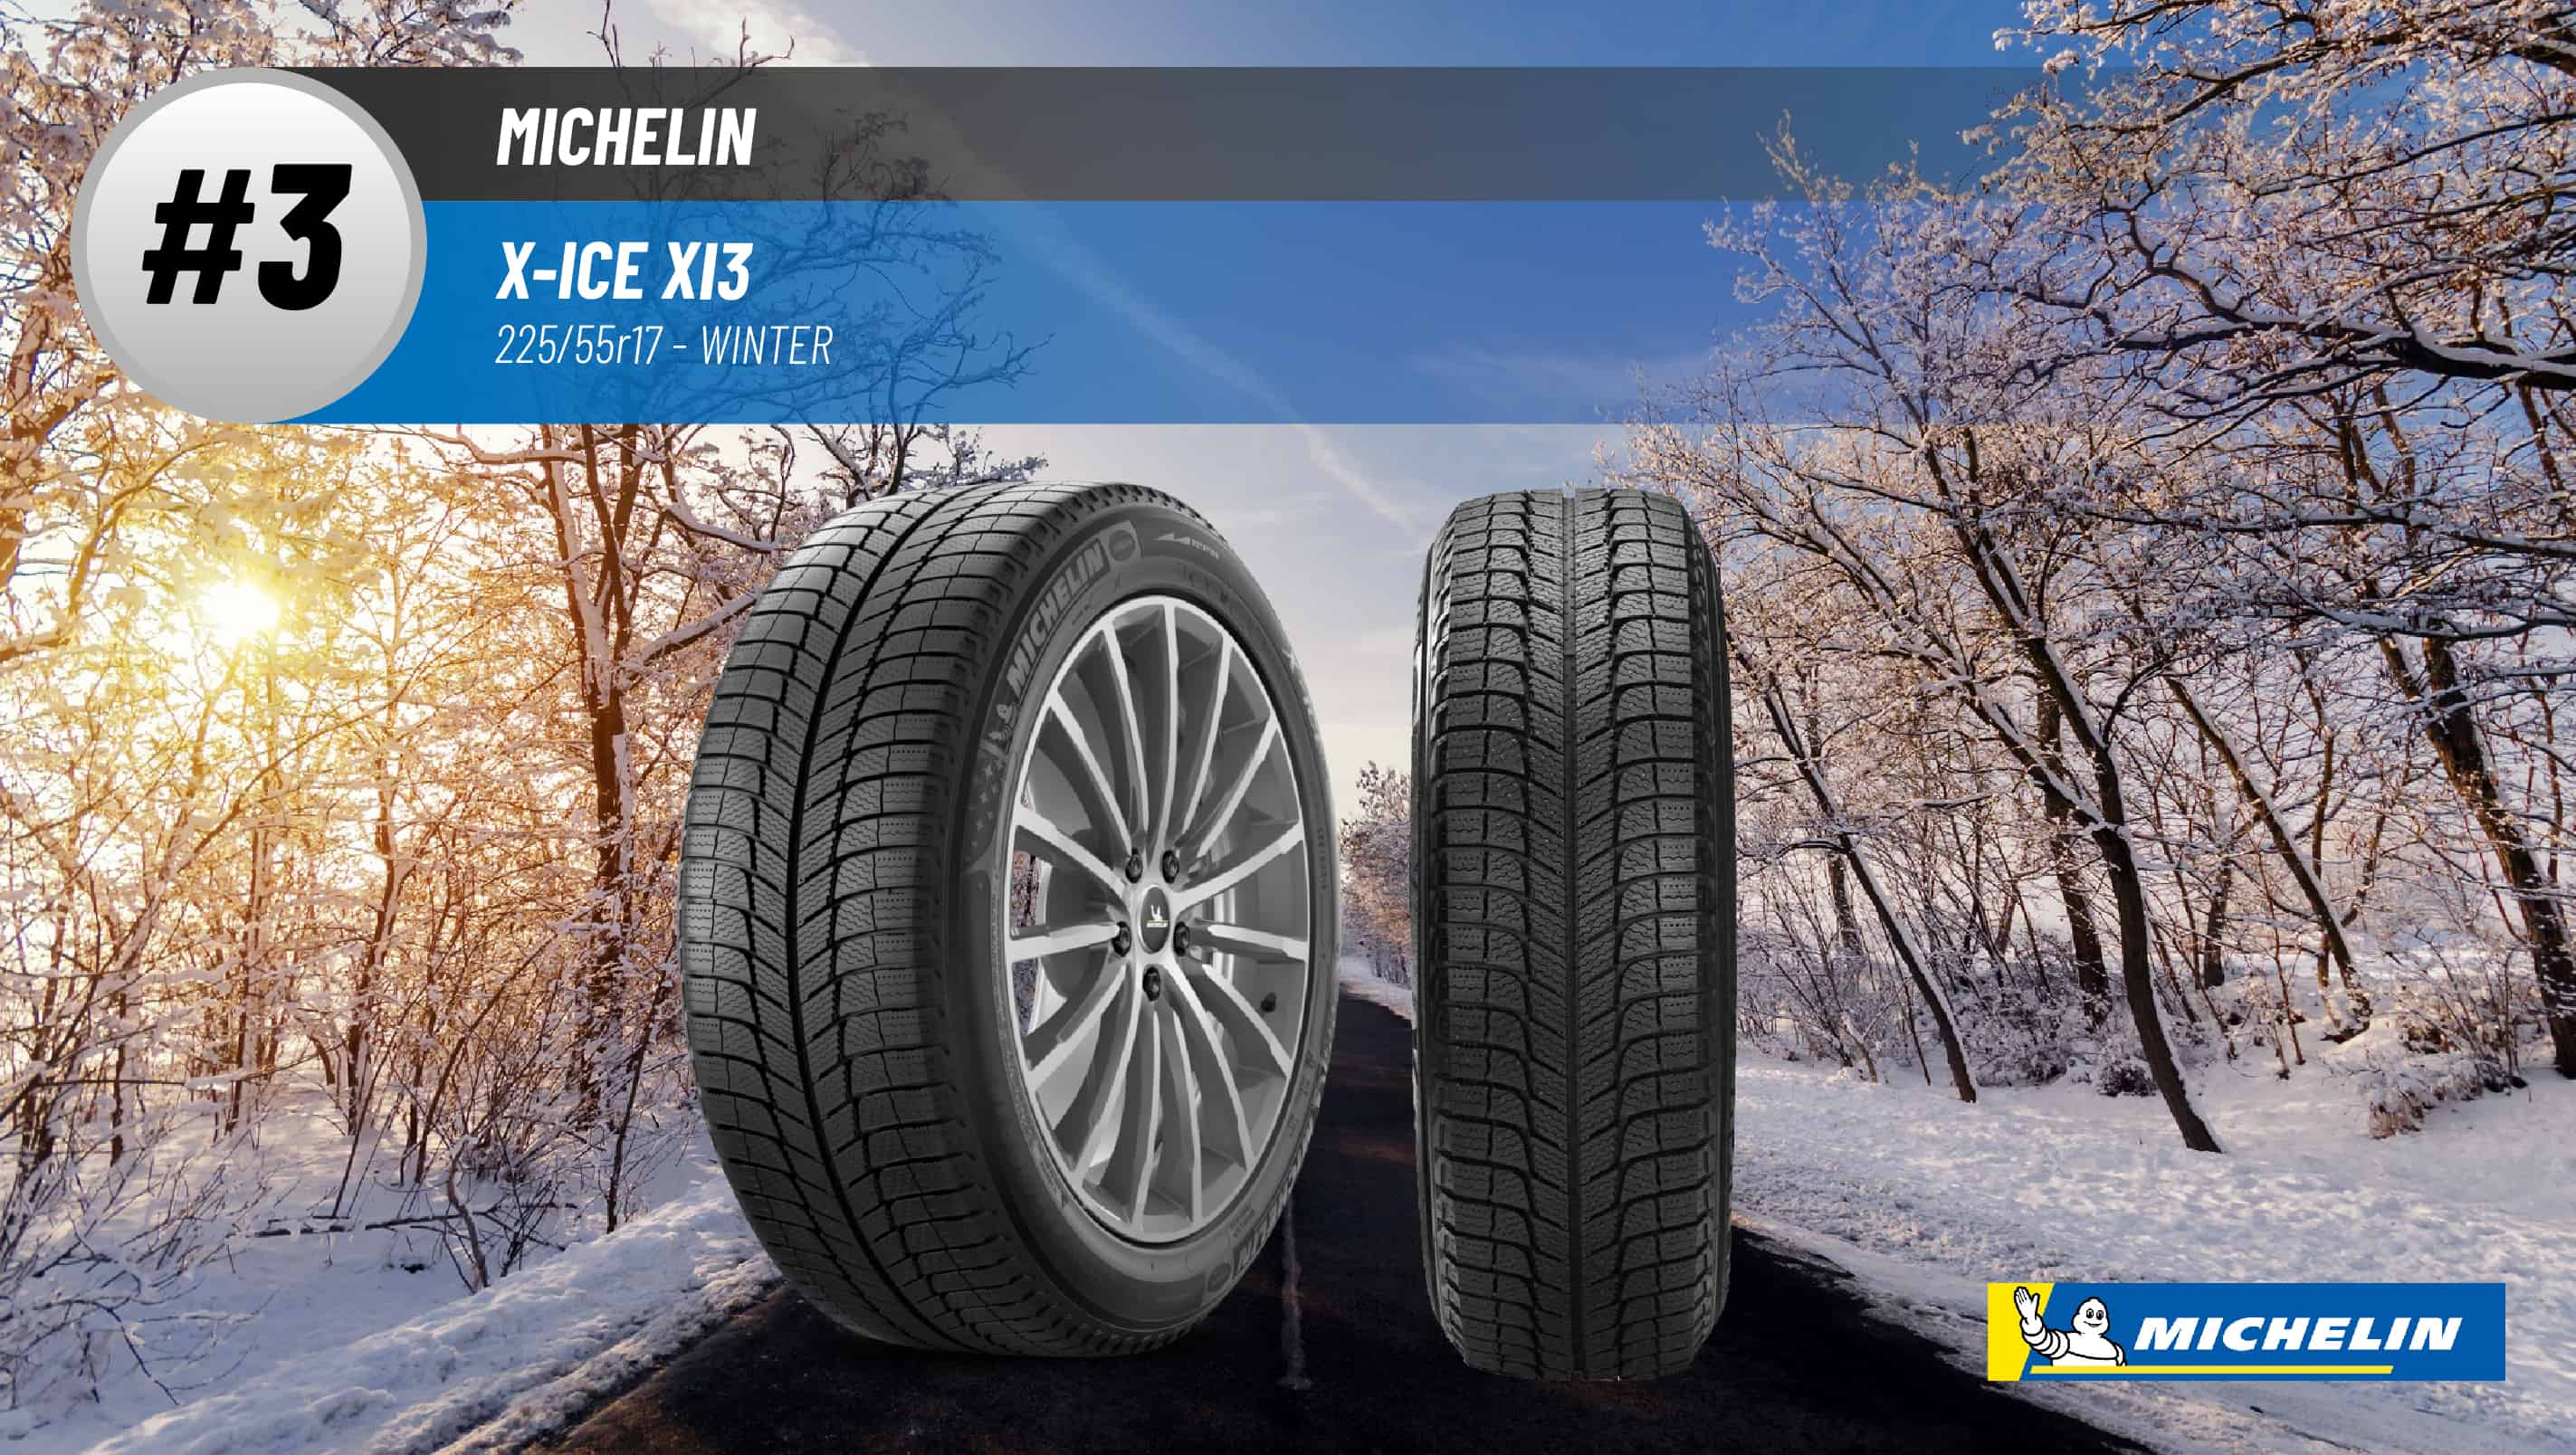 Top #3 Winter Tires: Michelin X-ICE XI3 – 225/55R17